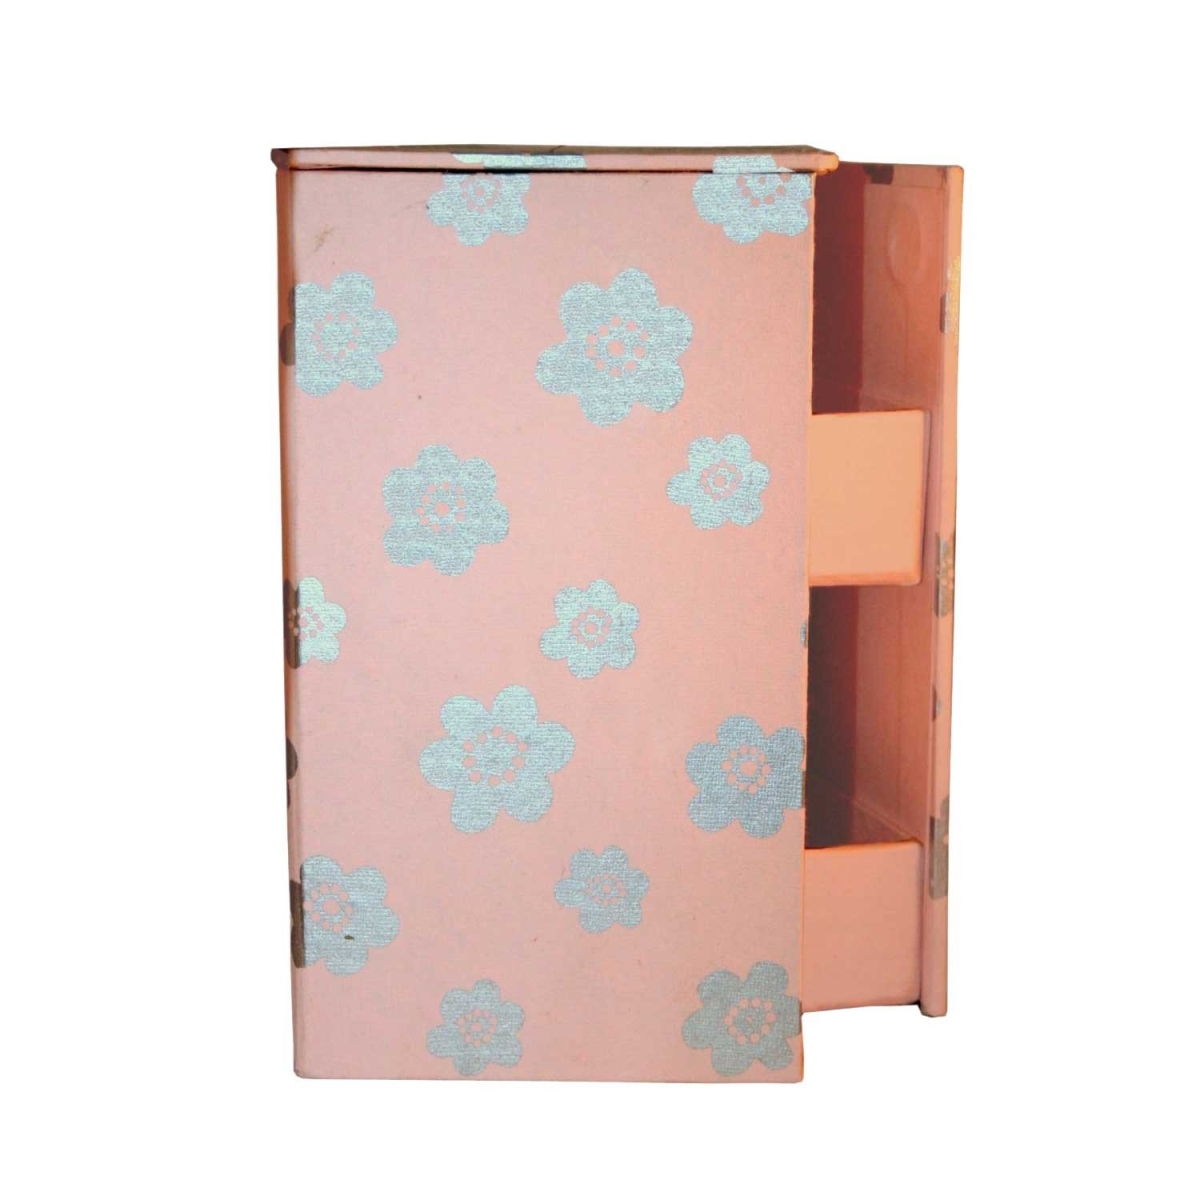 293-06-jb-534166 Handmade & Fair Trade Swivel Jewelry Box - Cherry Blossom Design